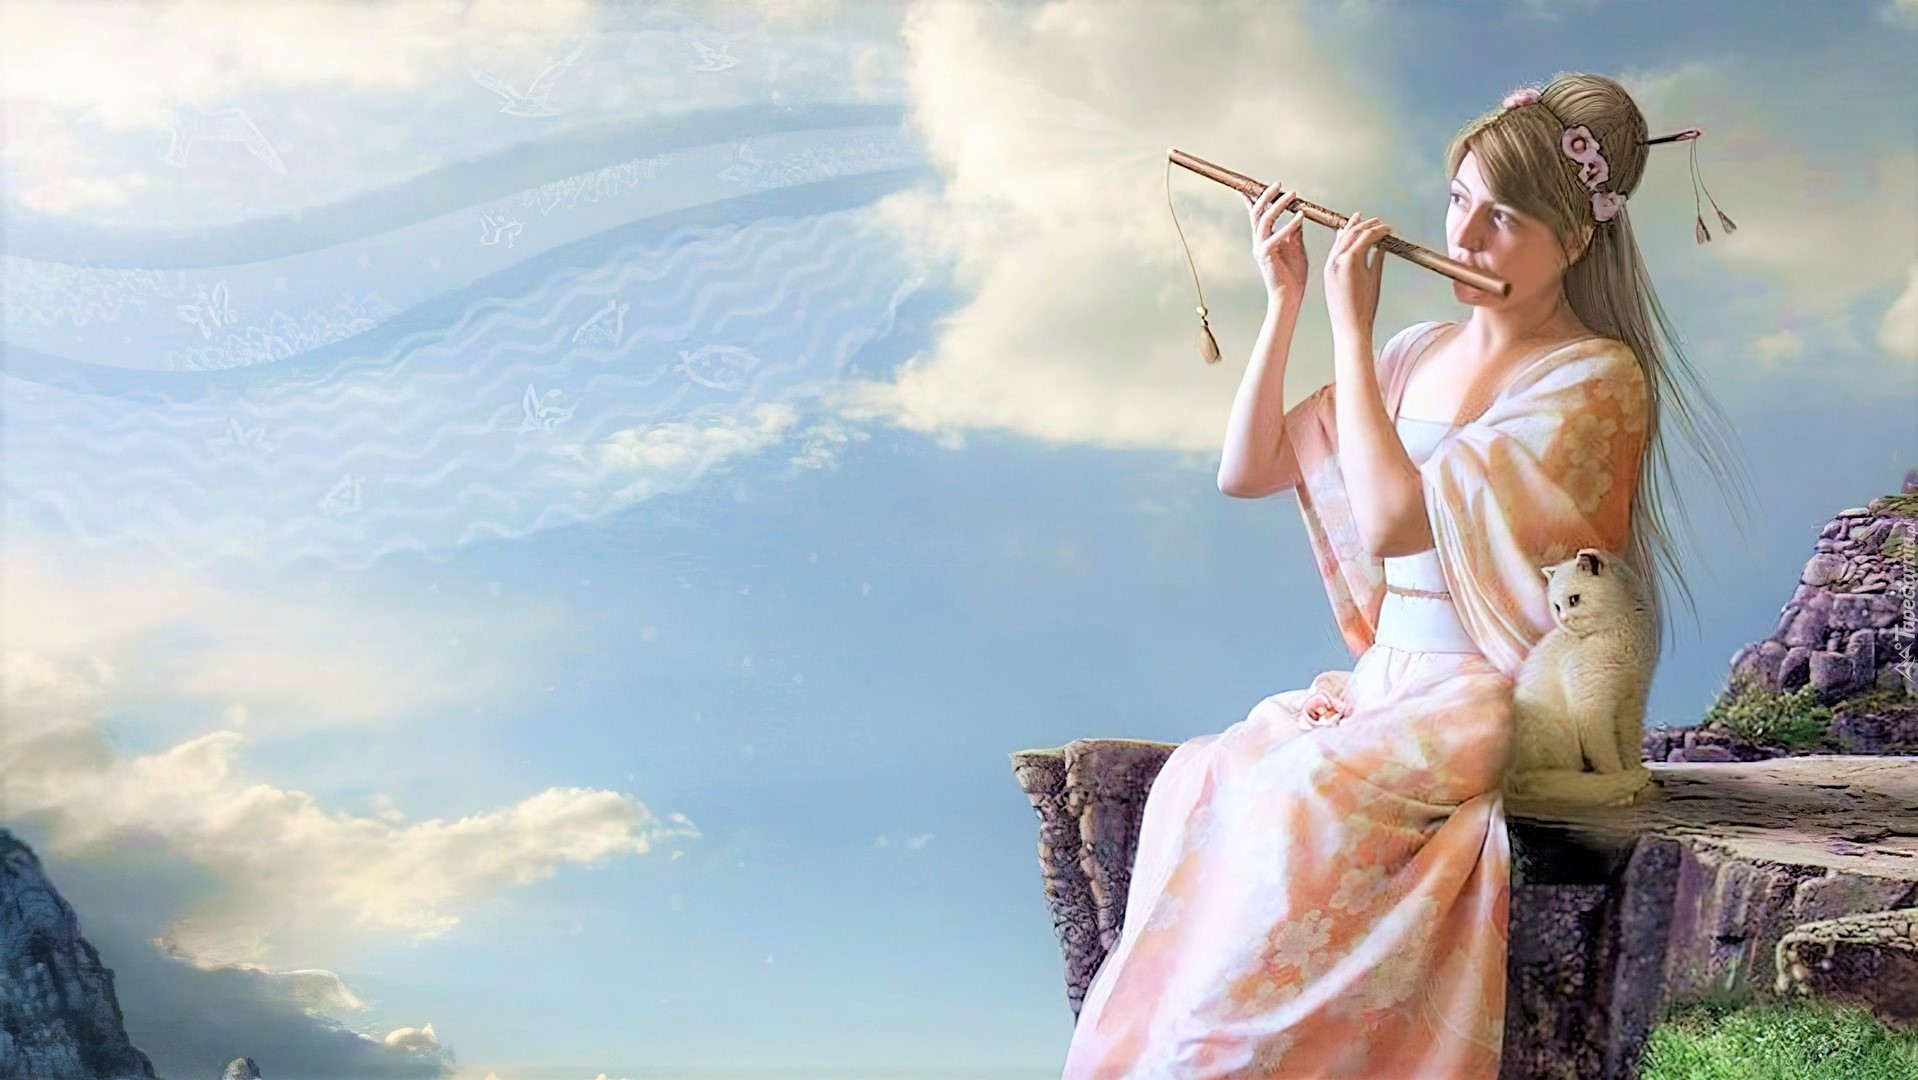 Центр душа поет. Девушка с флейтой. Девушка с флейтой фэнтези. Флейта на природе. Девушка с флейтой картина.